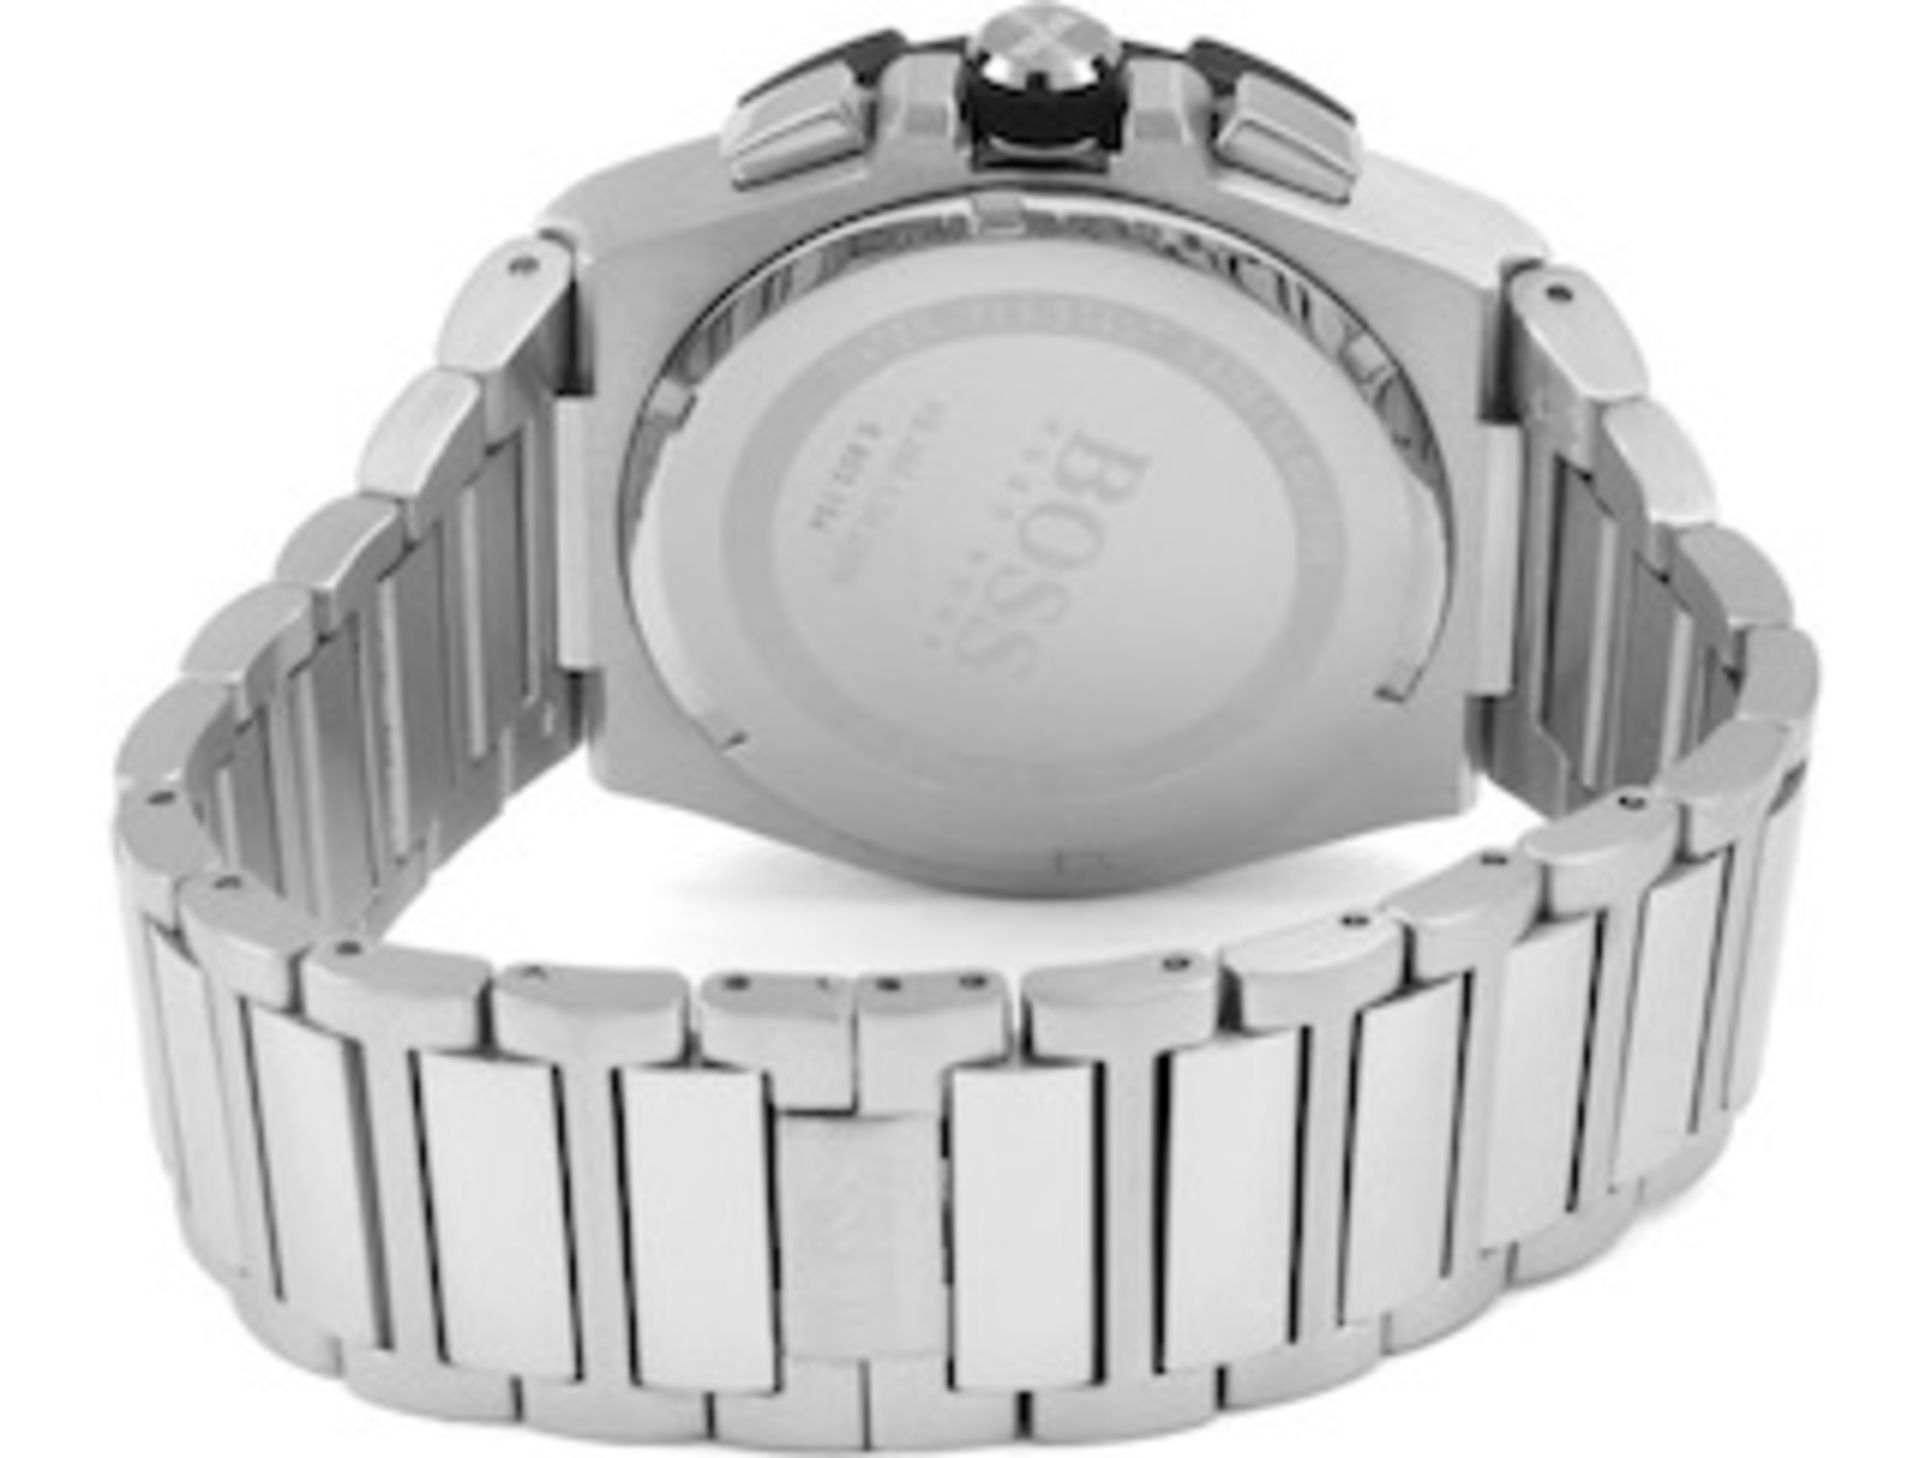 Hugo Boss 1513359 Men's Supernova Black Dial Silver Bracelet Chronograph Watch - Image 5 of 5